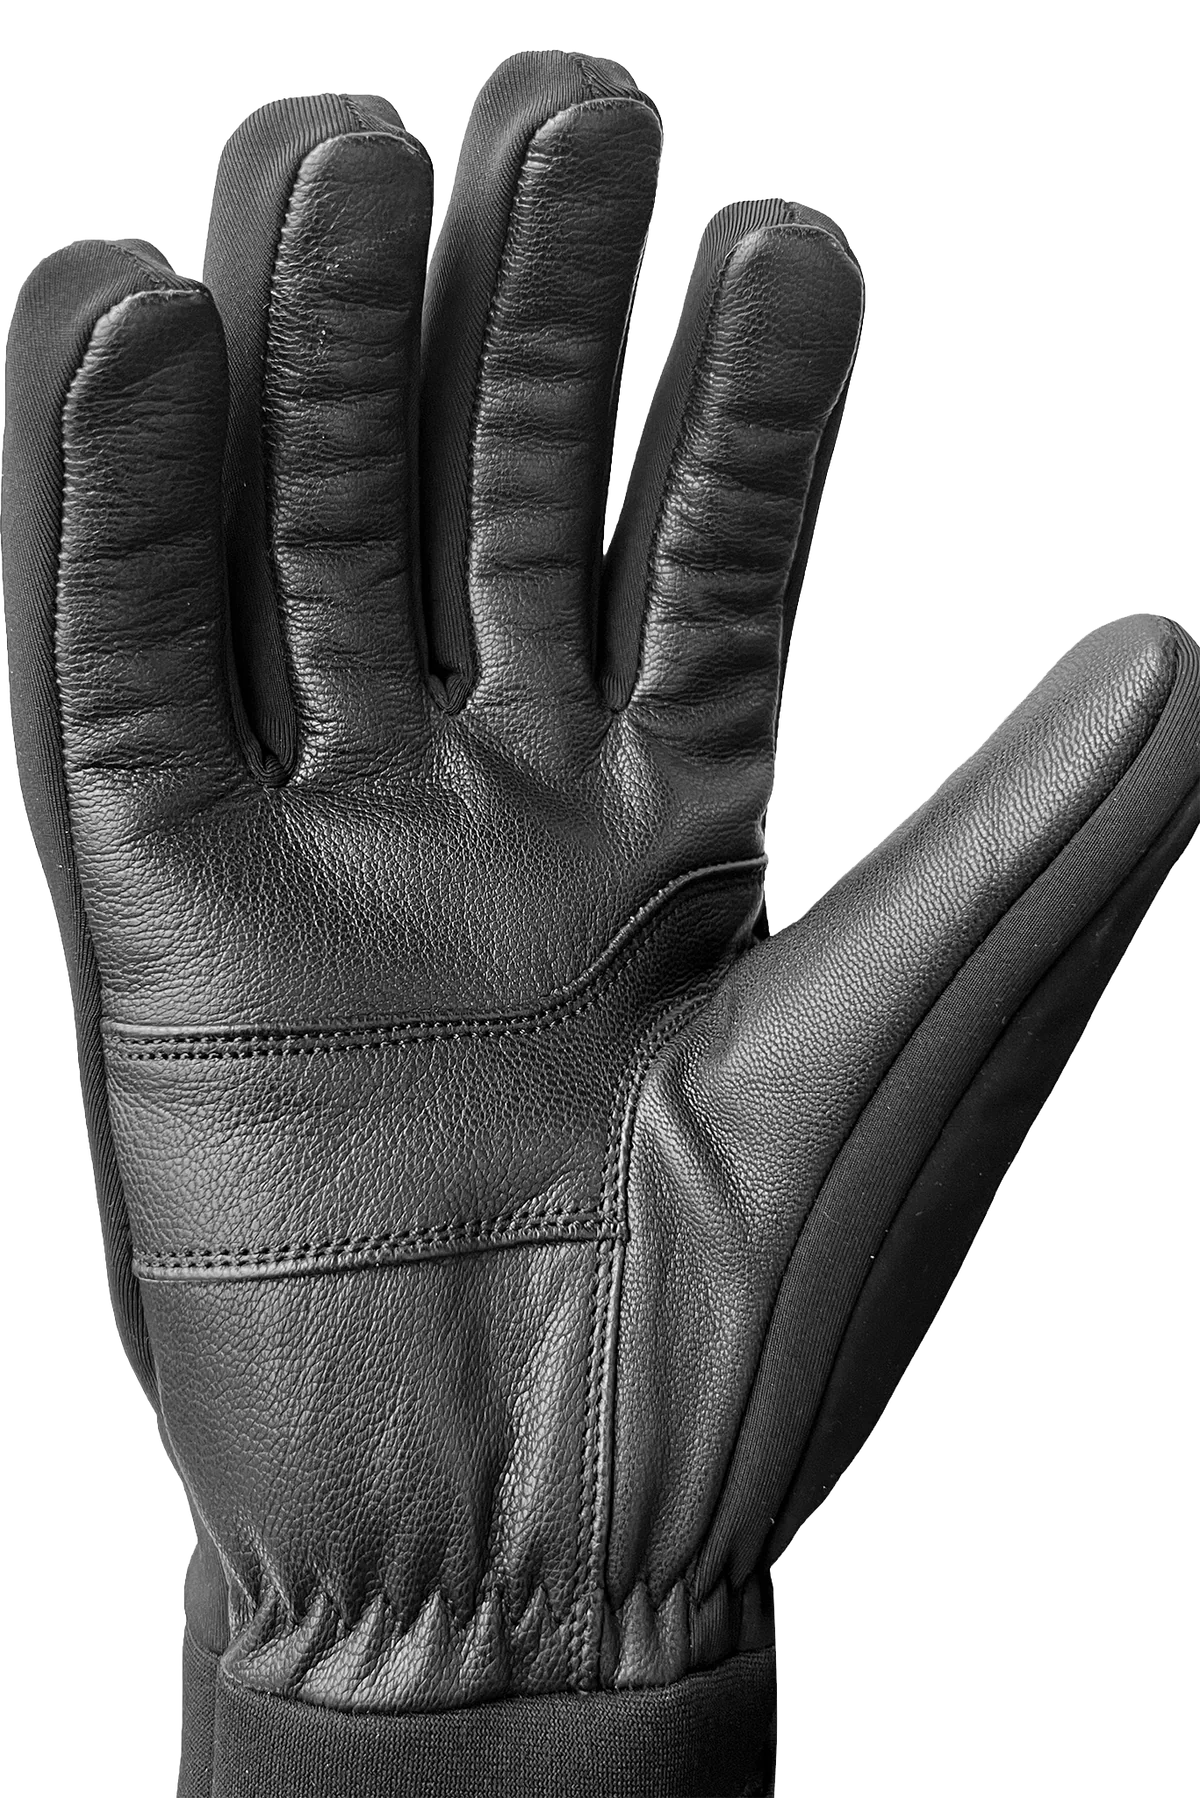 GANTS NEOPRENE ZONE3 BLACK/SILVER UNISEXE Gants Accessoires Textiles Homme  Nos produits vendus en magasin - Running Planet Geneve